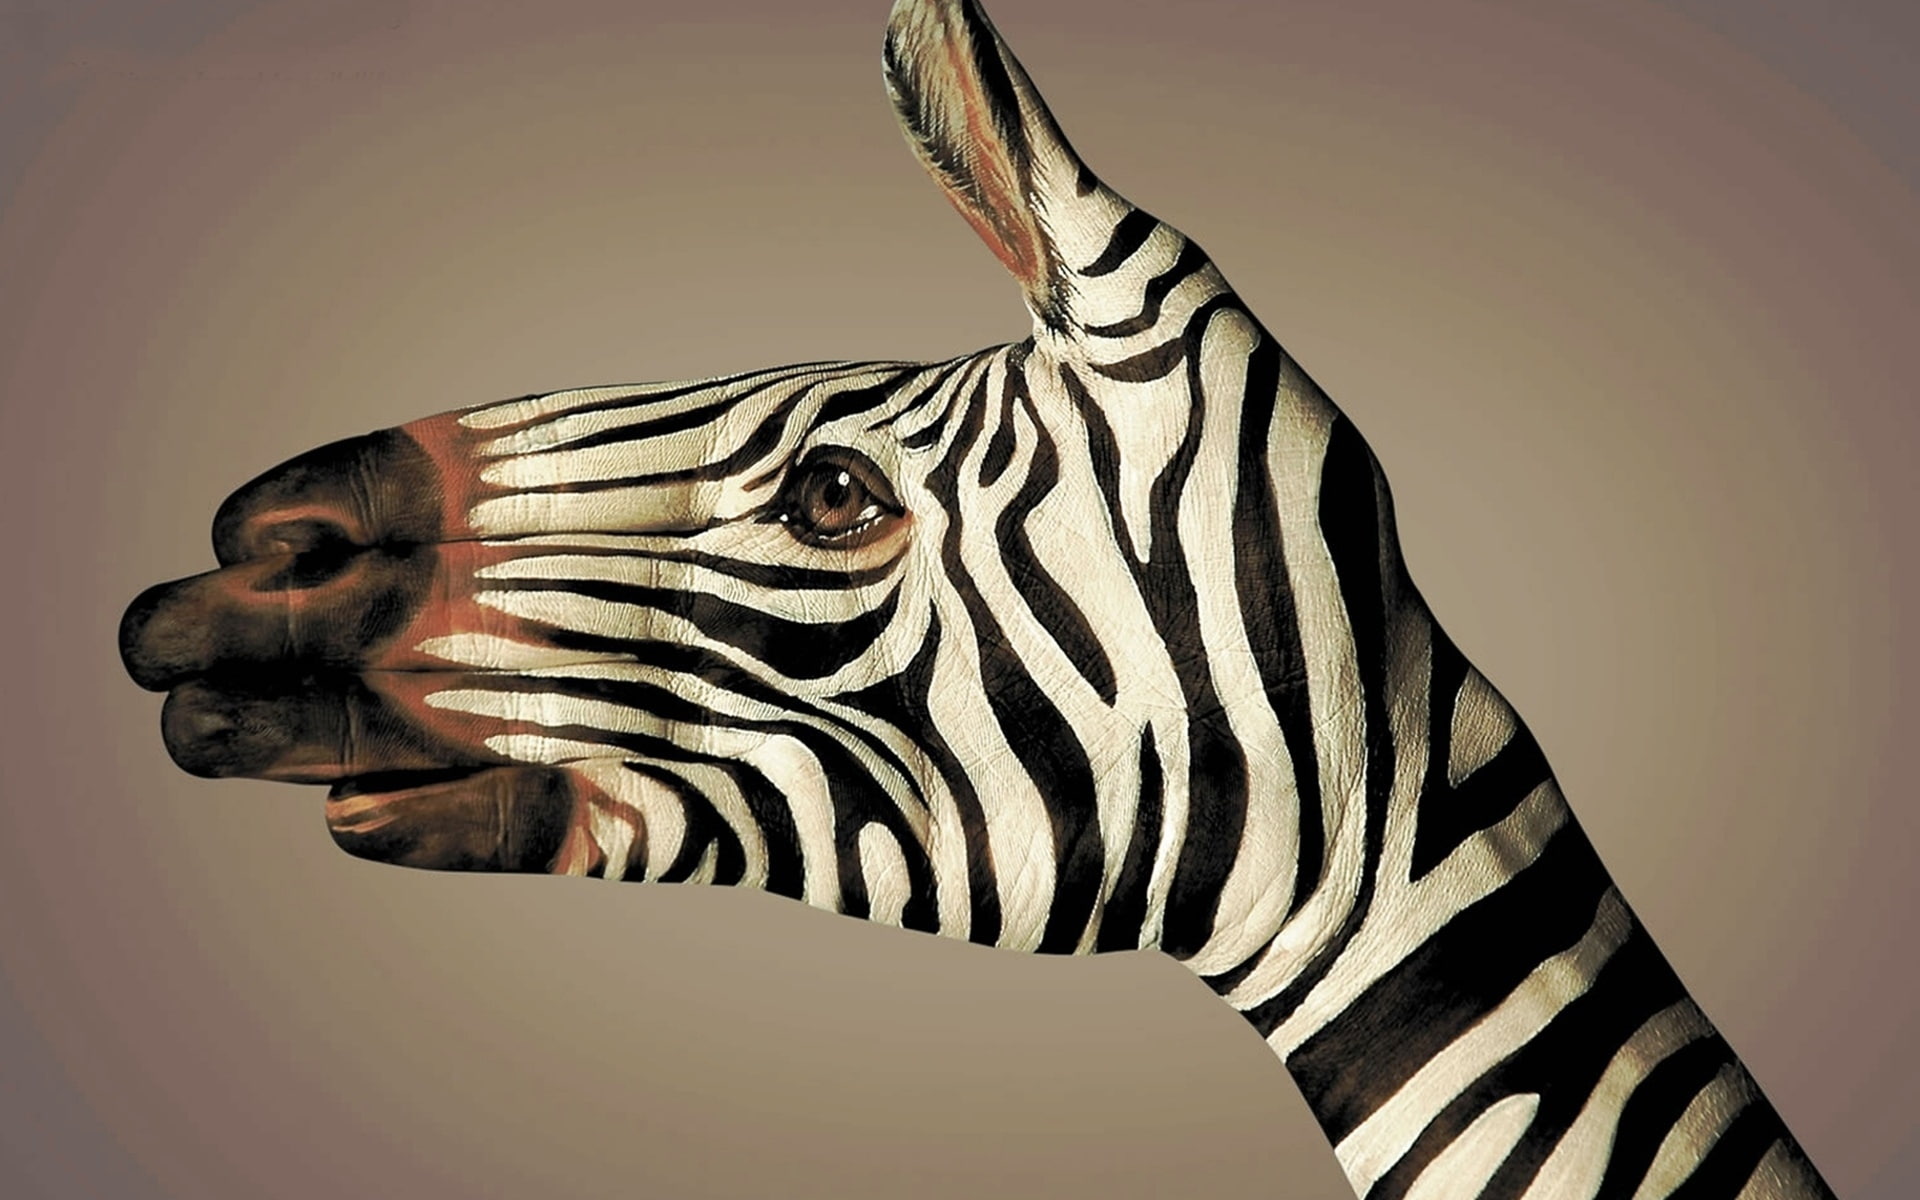 Body Art, hands, zebras, simple background, striped, animal